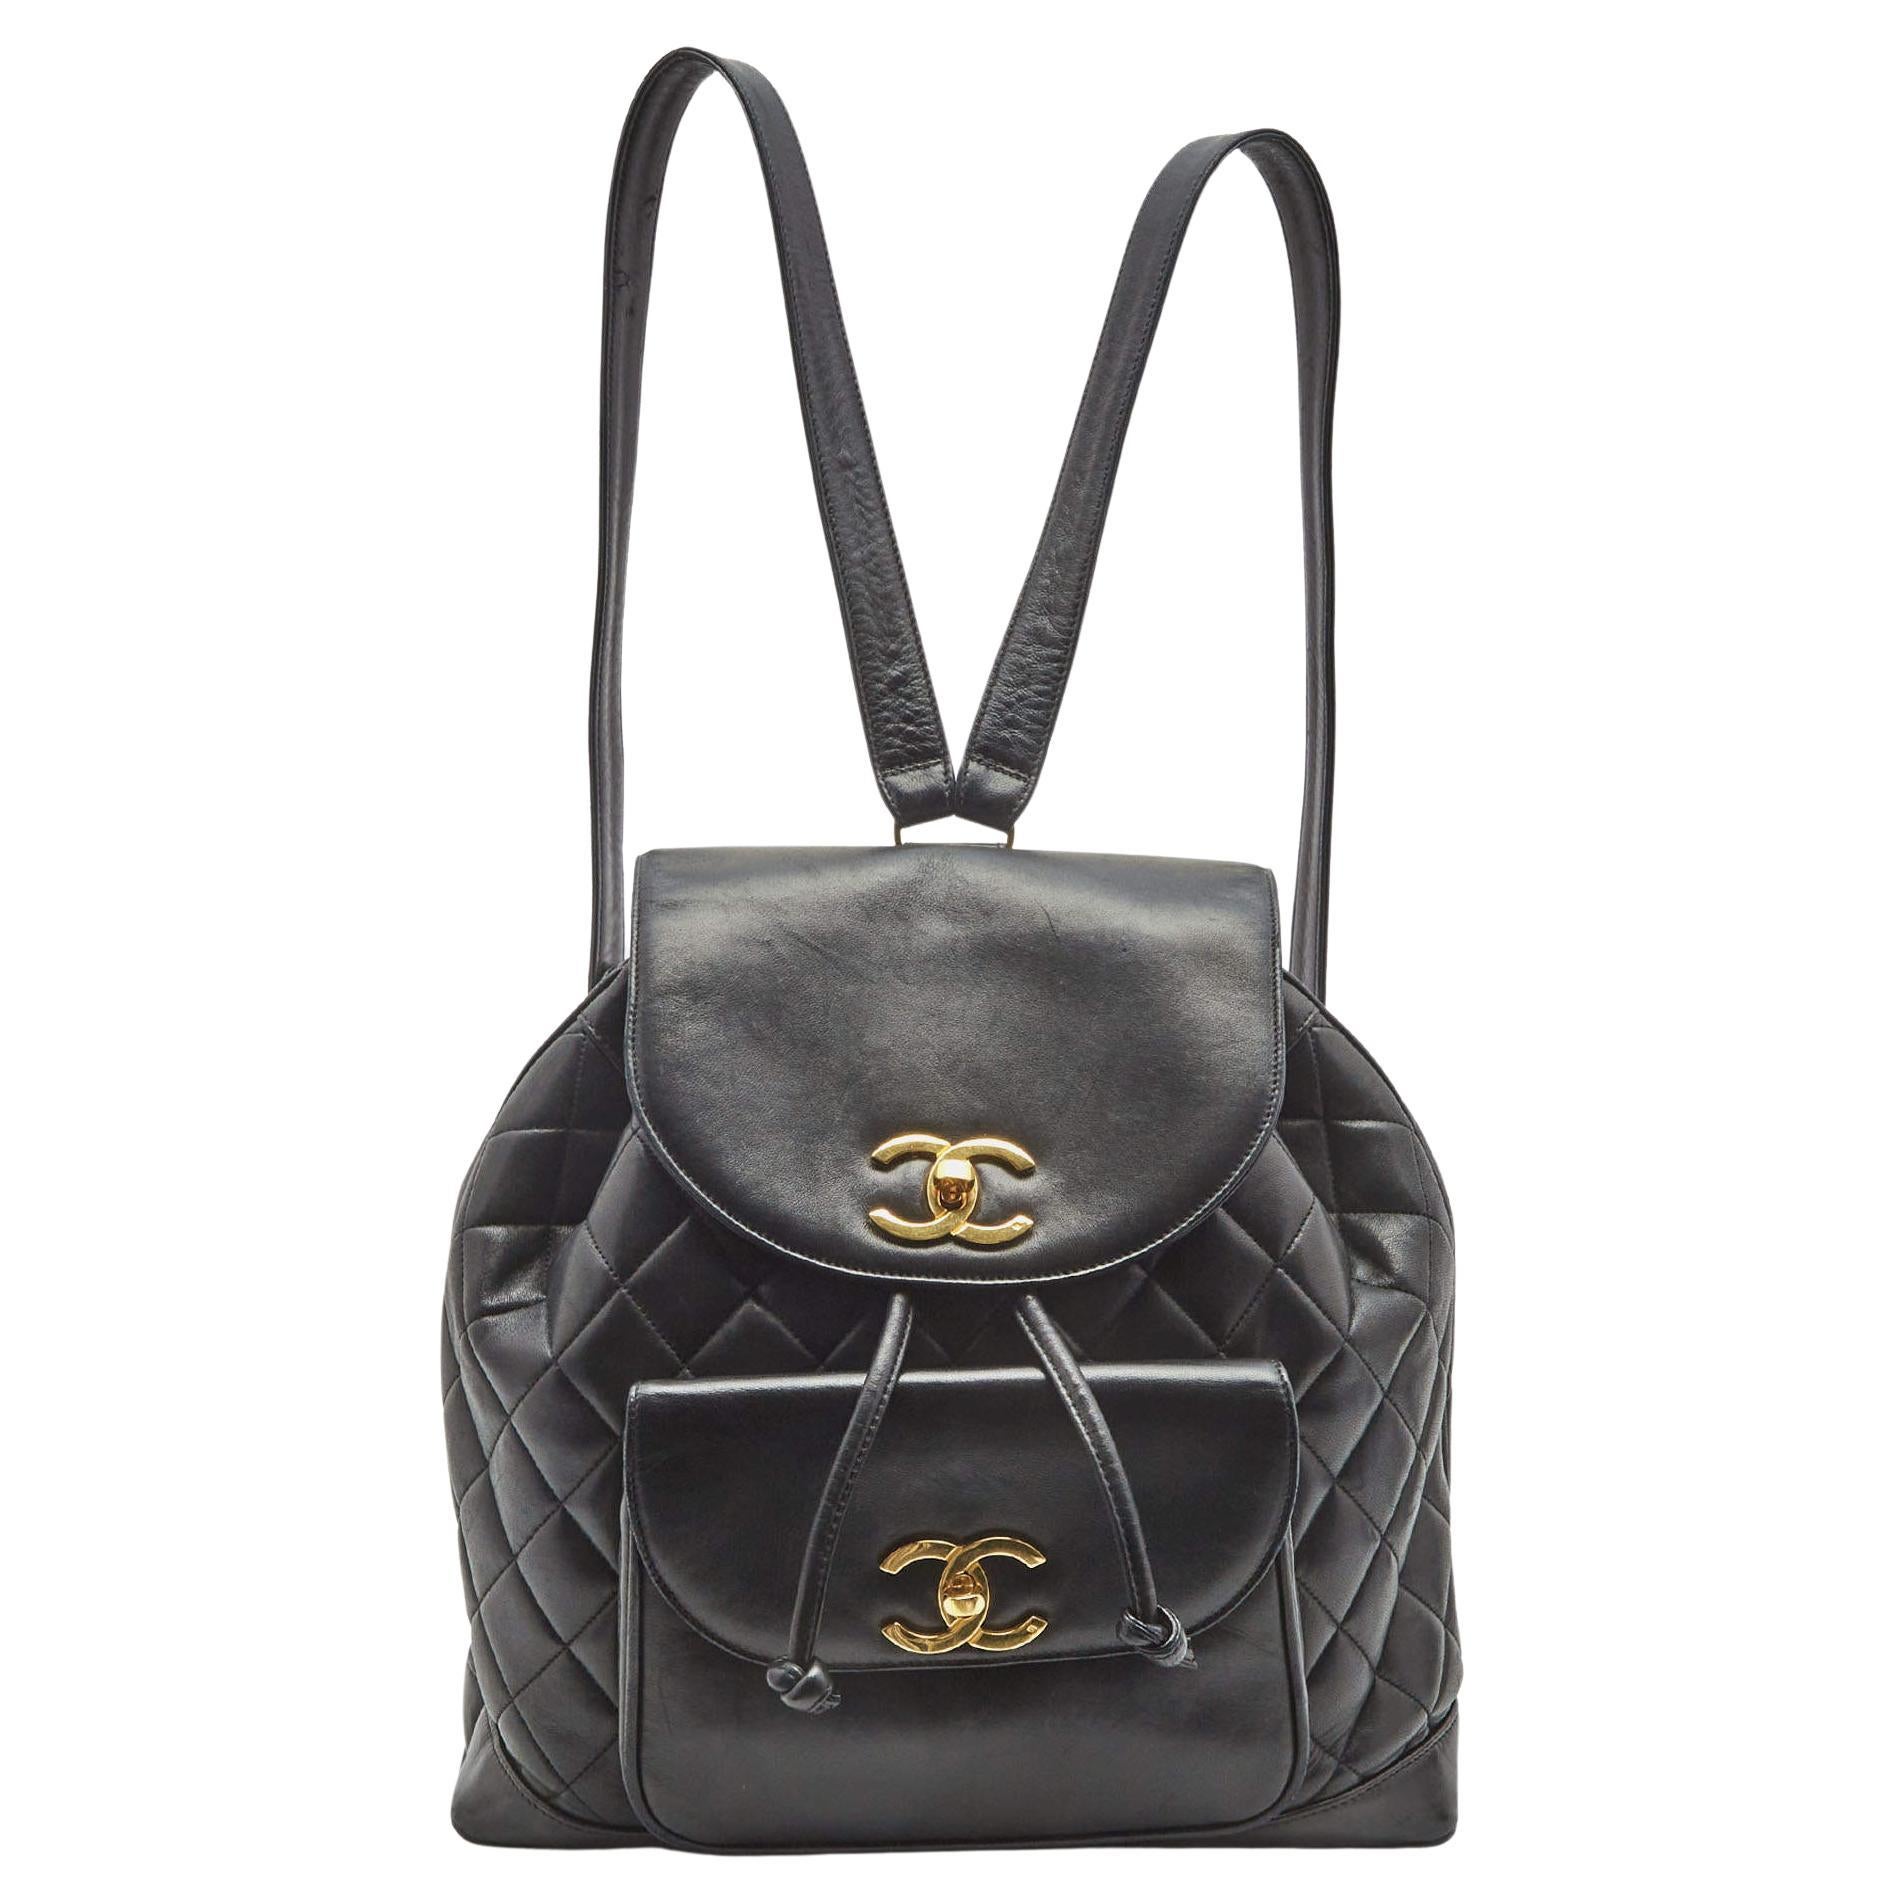 Chanel Black Lambskin Leather Large Backpack is Back Bag For Sale at 1stDibs